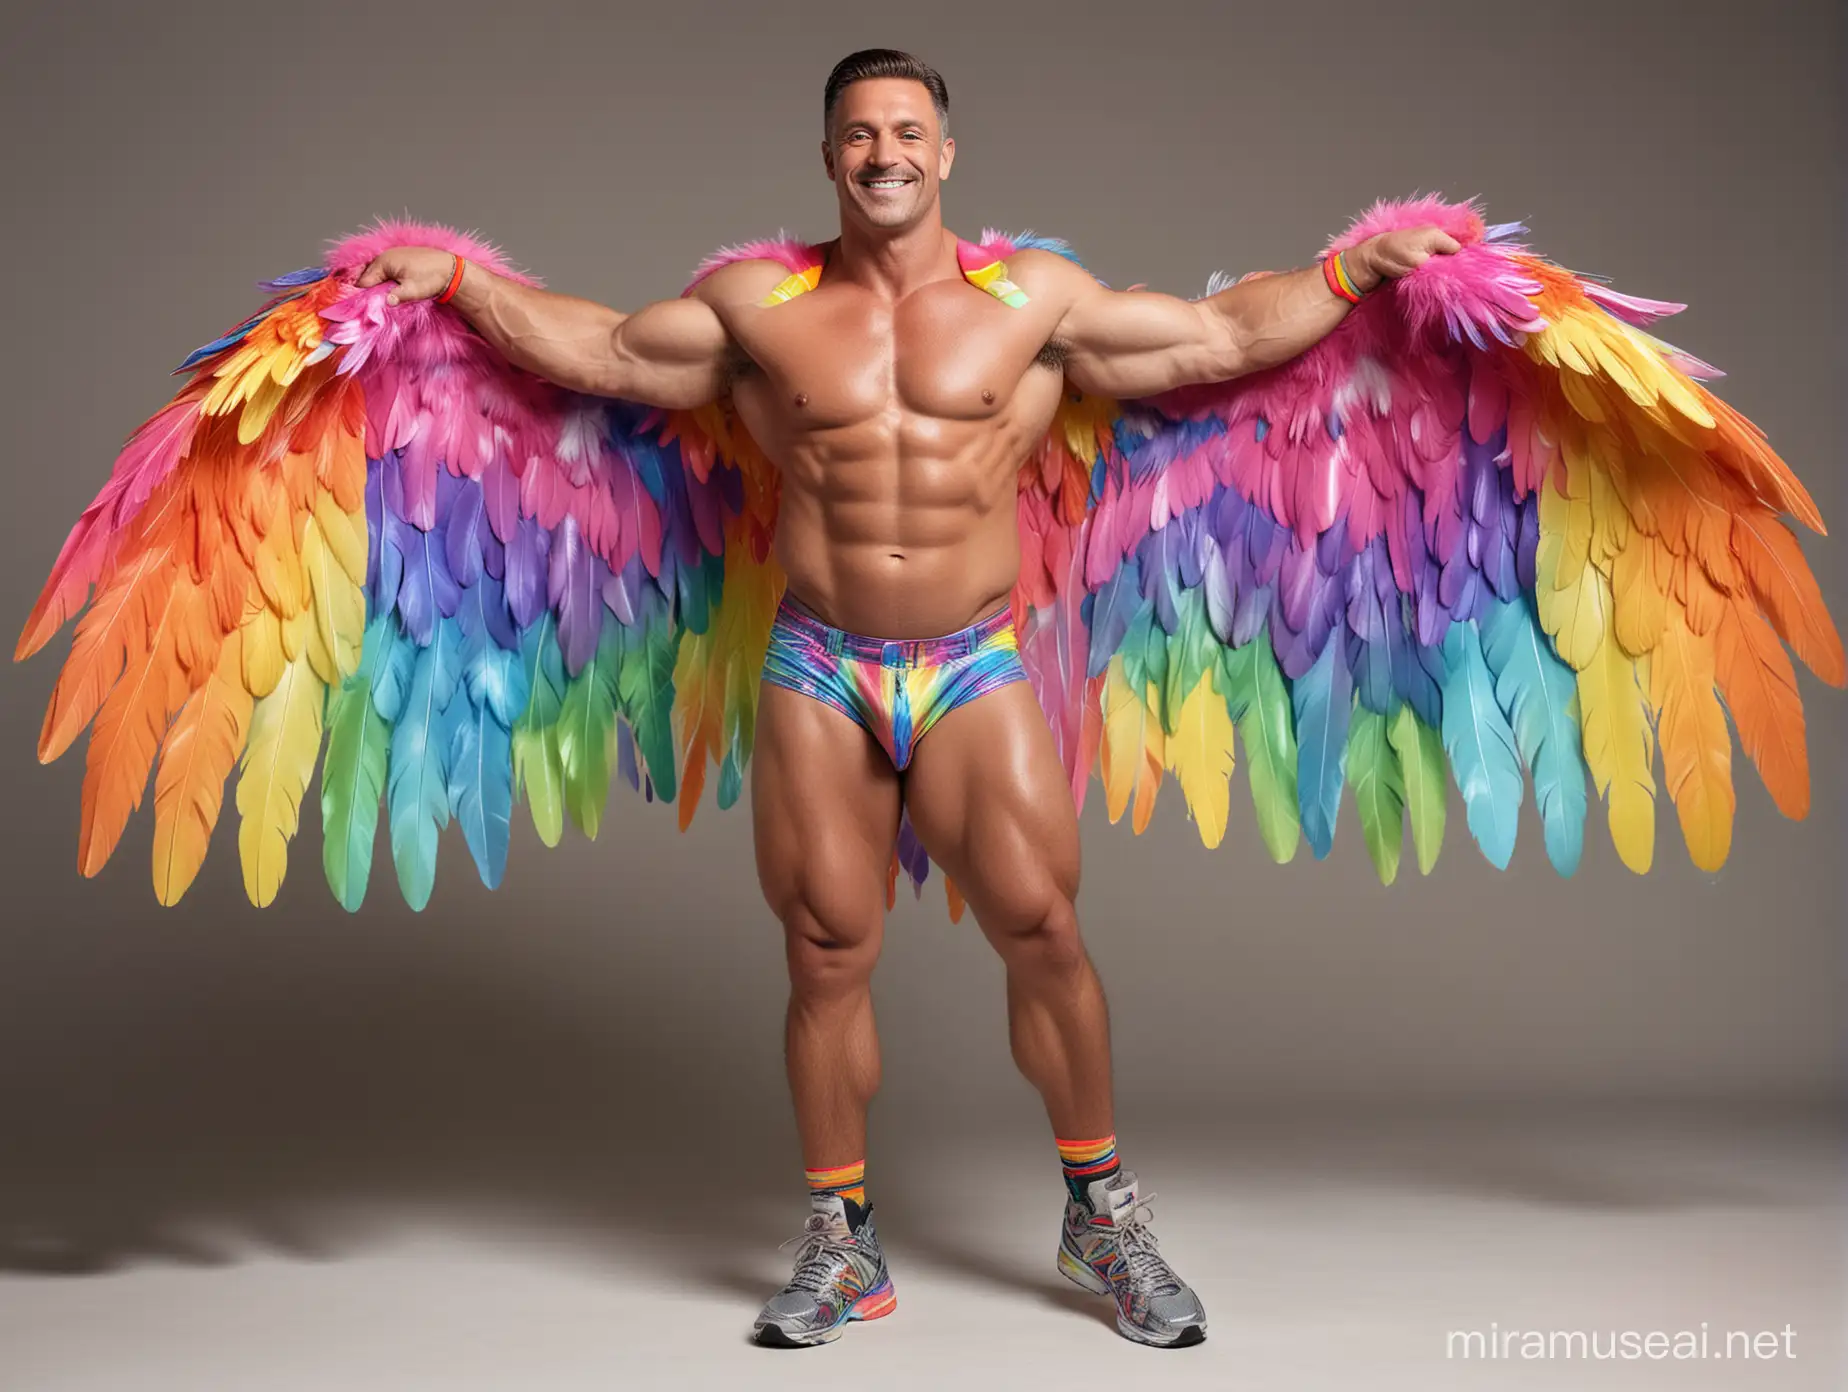 Joyful 40s Chunky Bodybuilder Daddy with Rainbow Wings Jacket Flexing